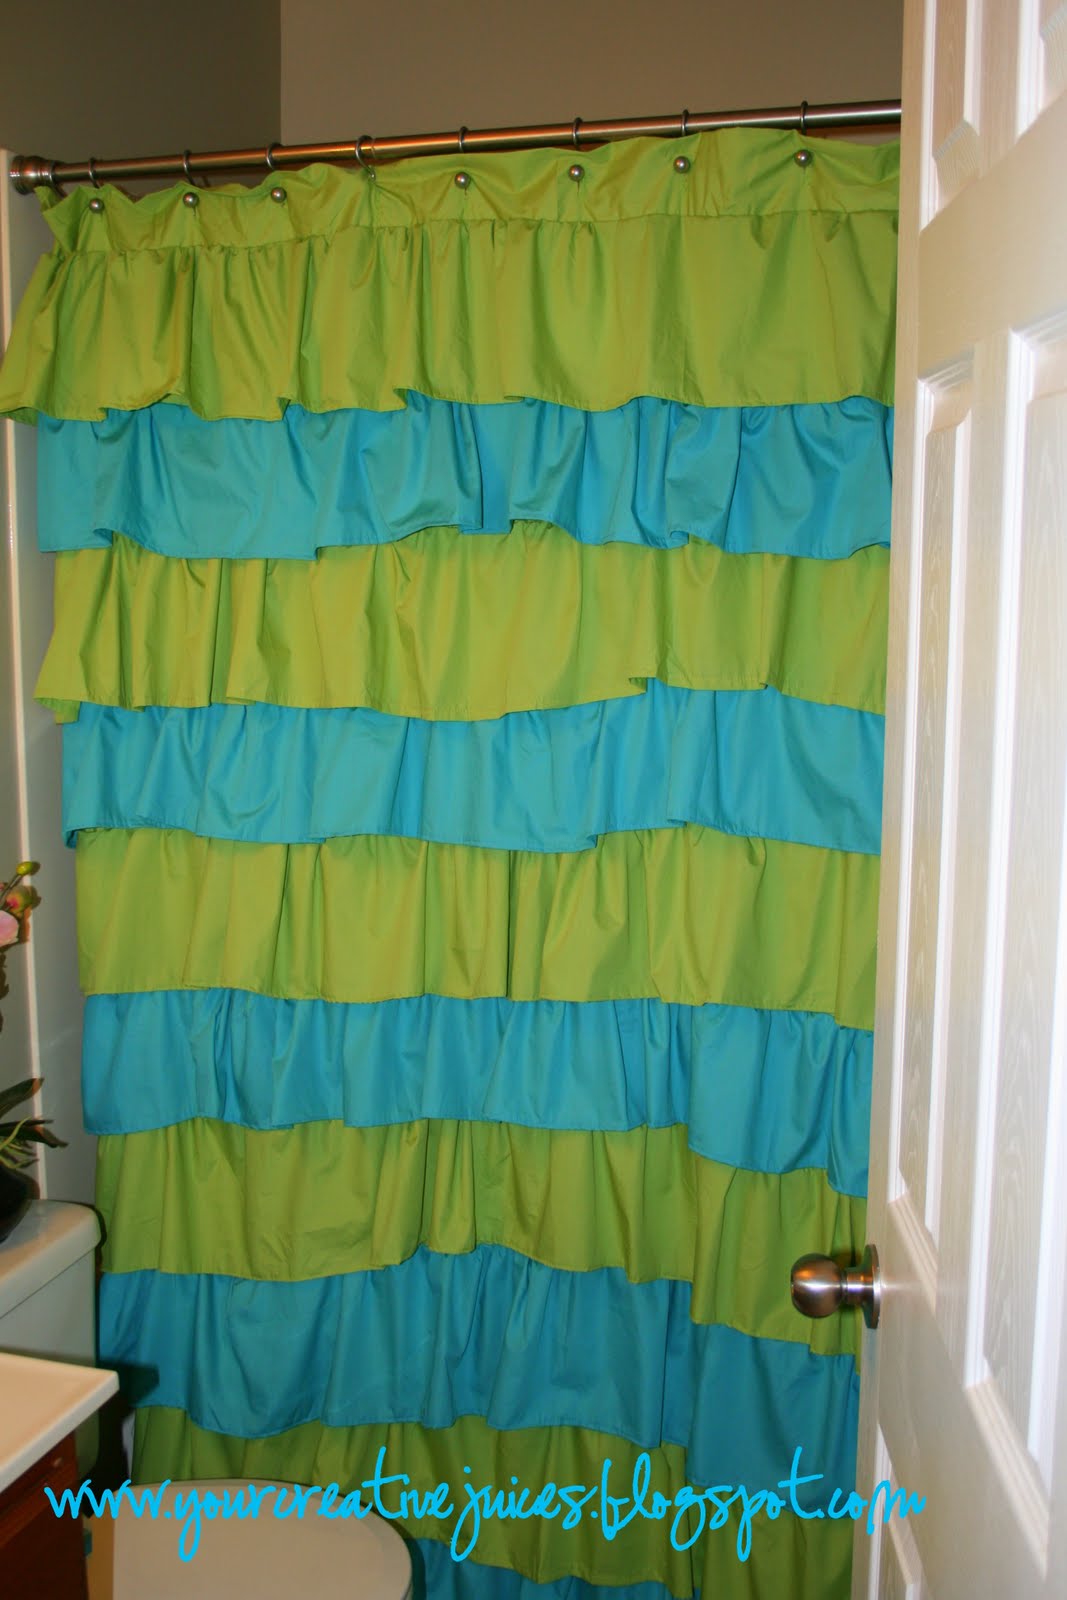 Creative Juices: My 9.00 Ruffle Shower Curtain